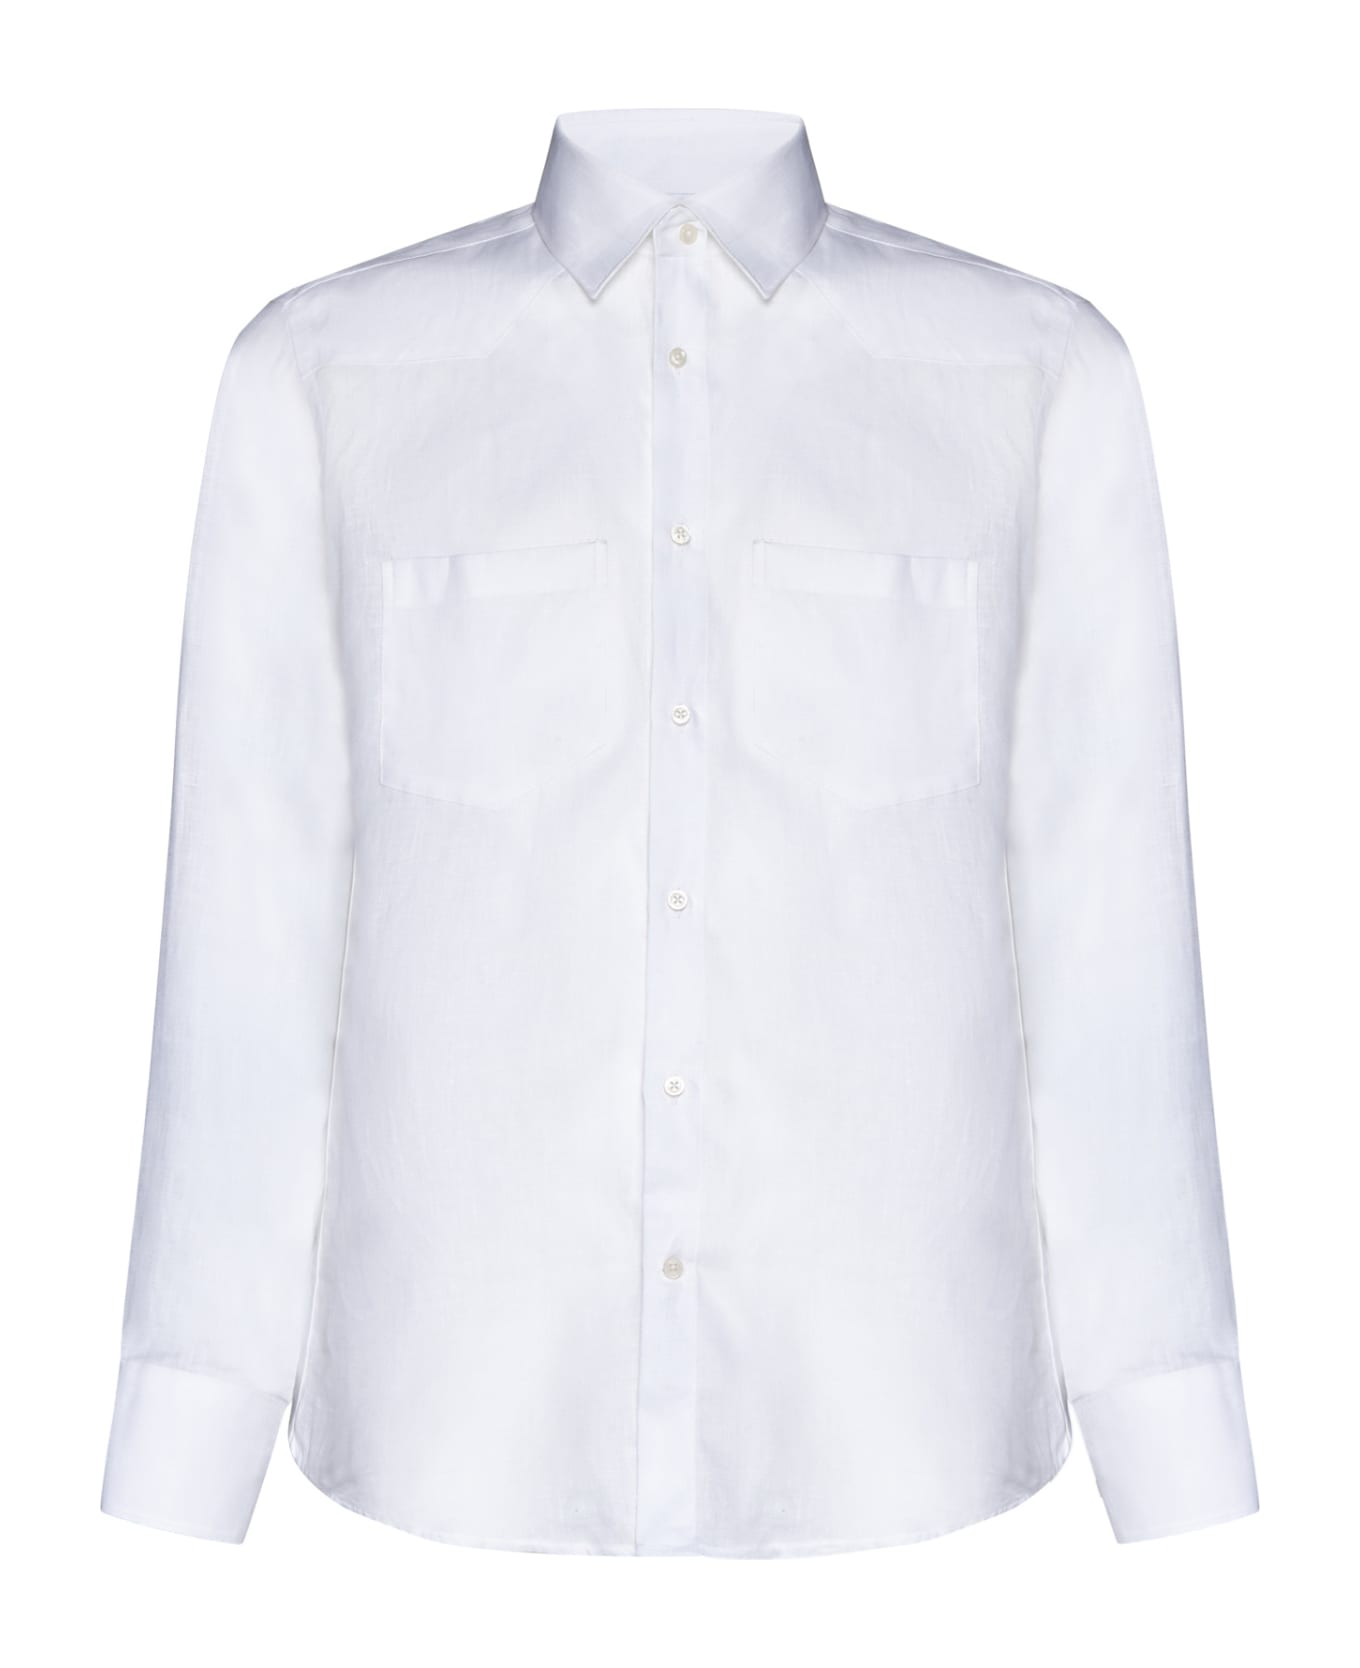 Low Brand Shirt - White